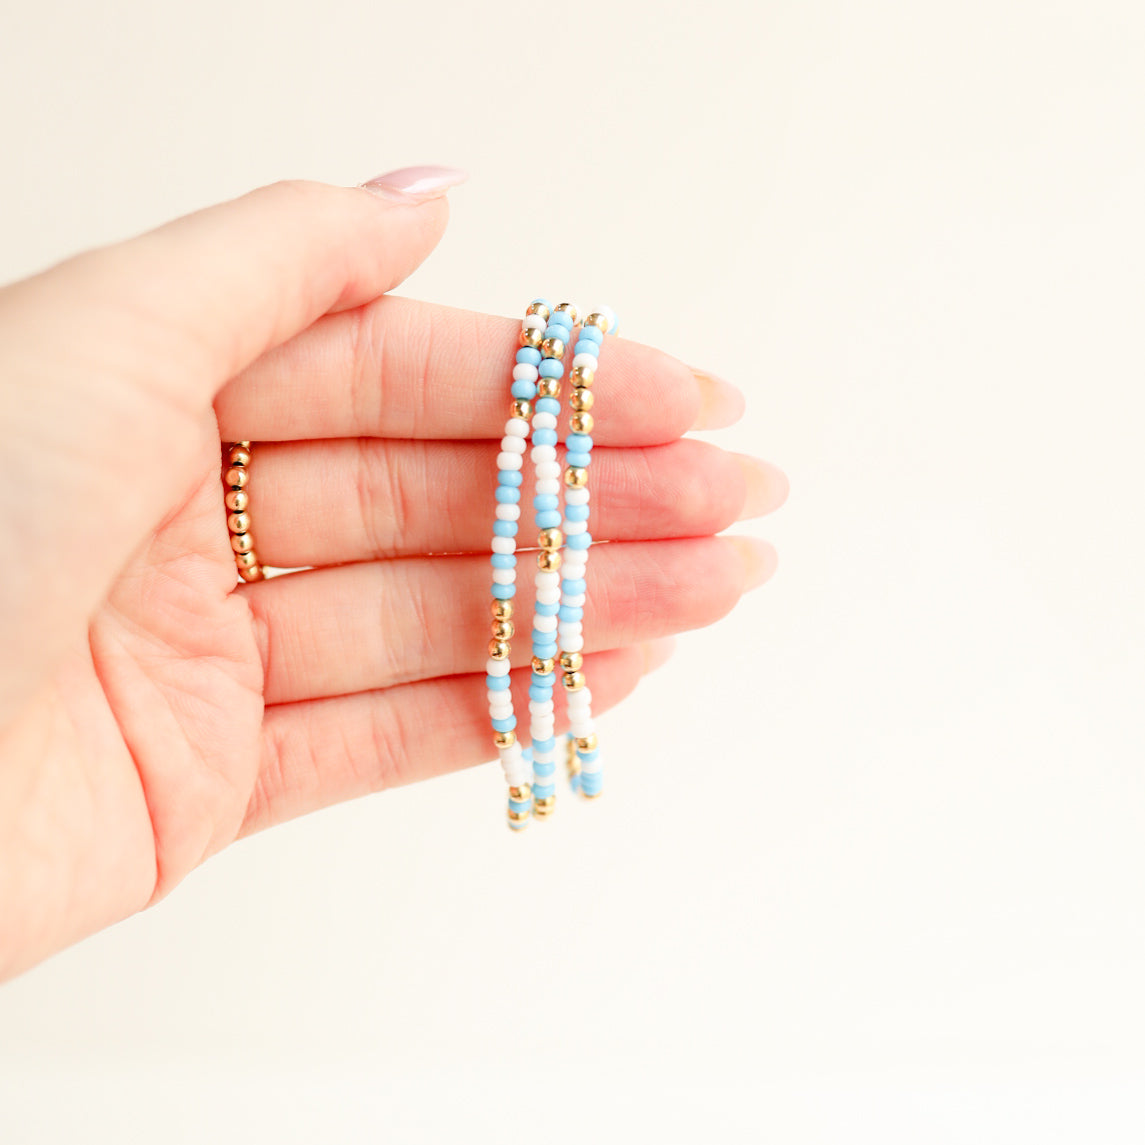 Blue and White Sprinkle Bracelet